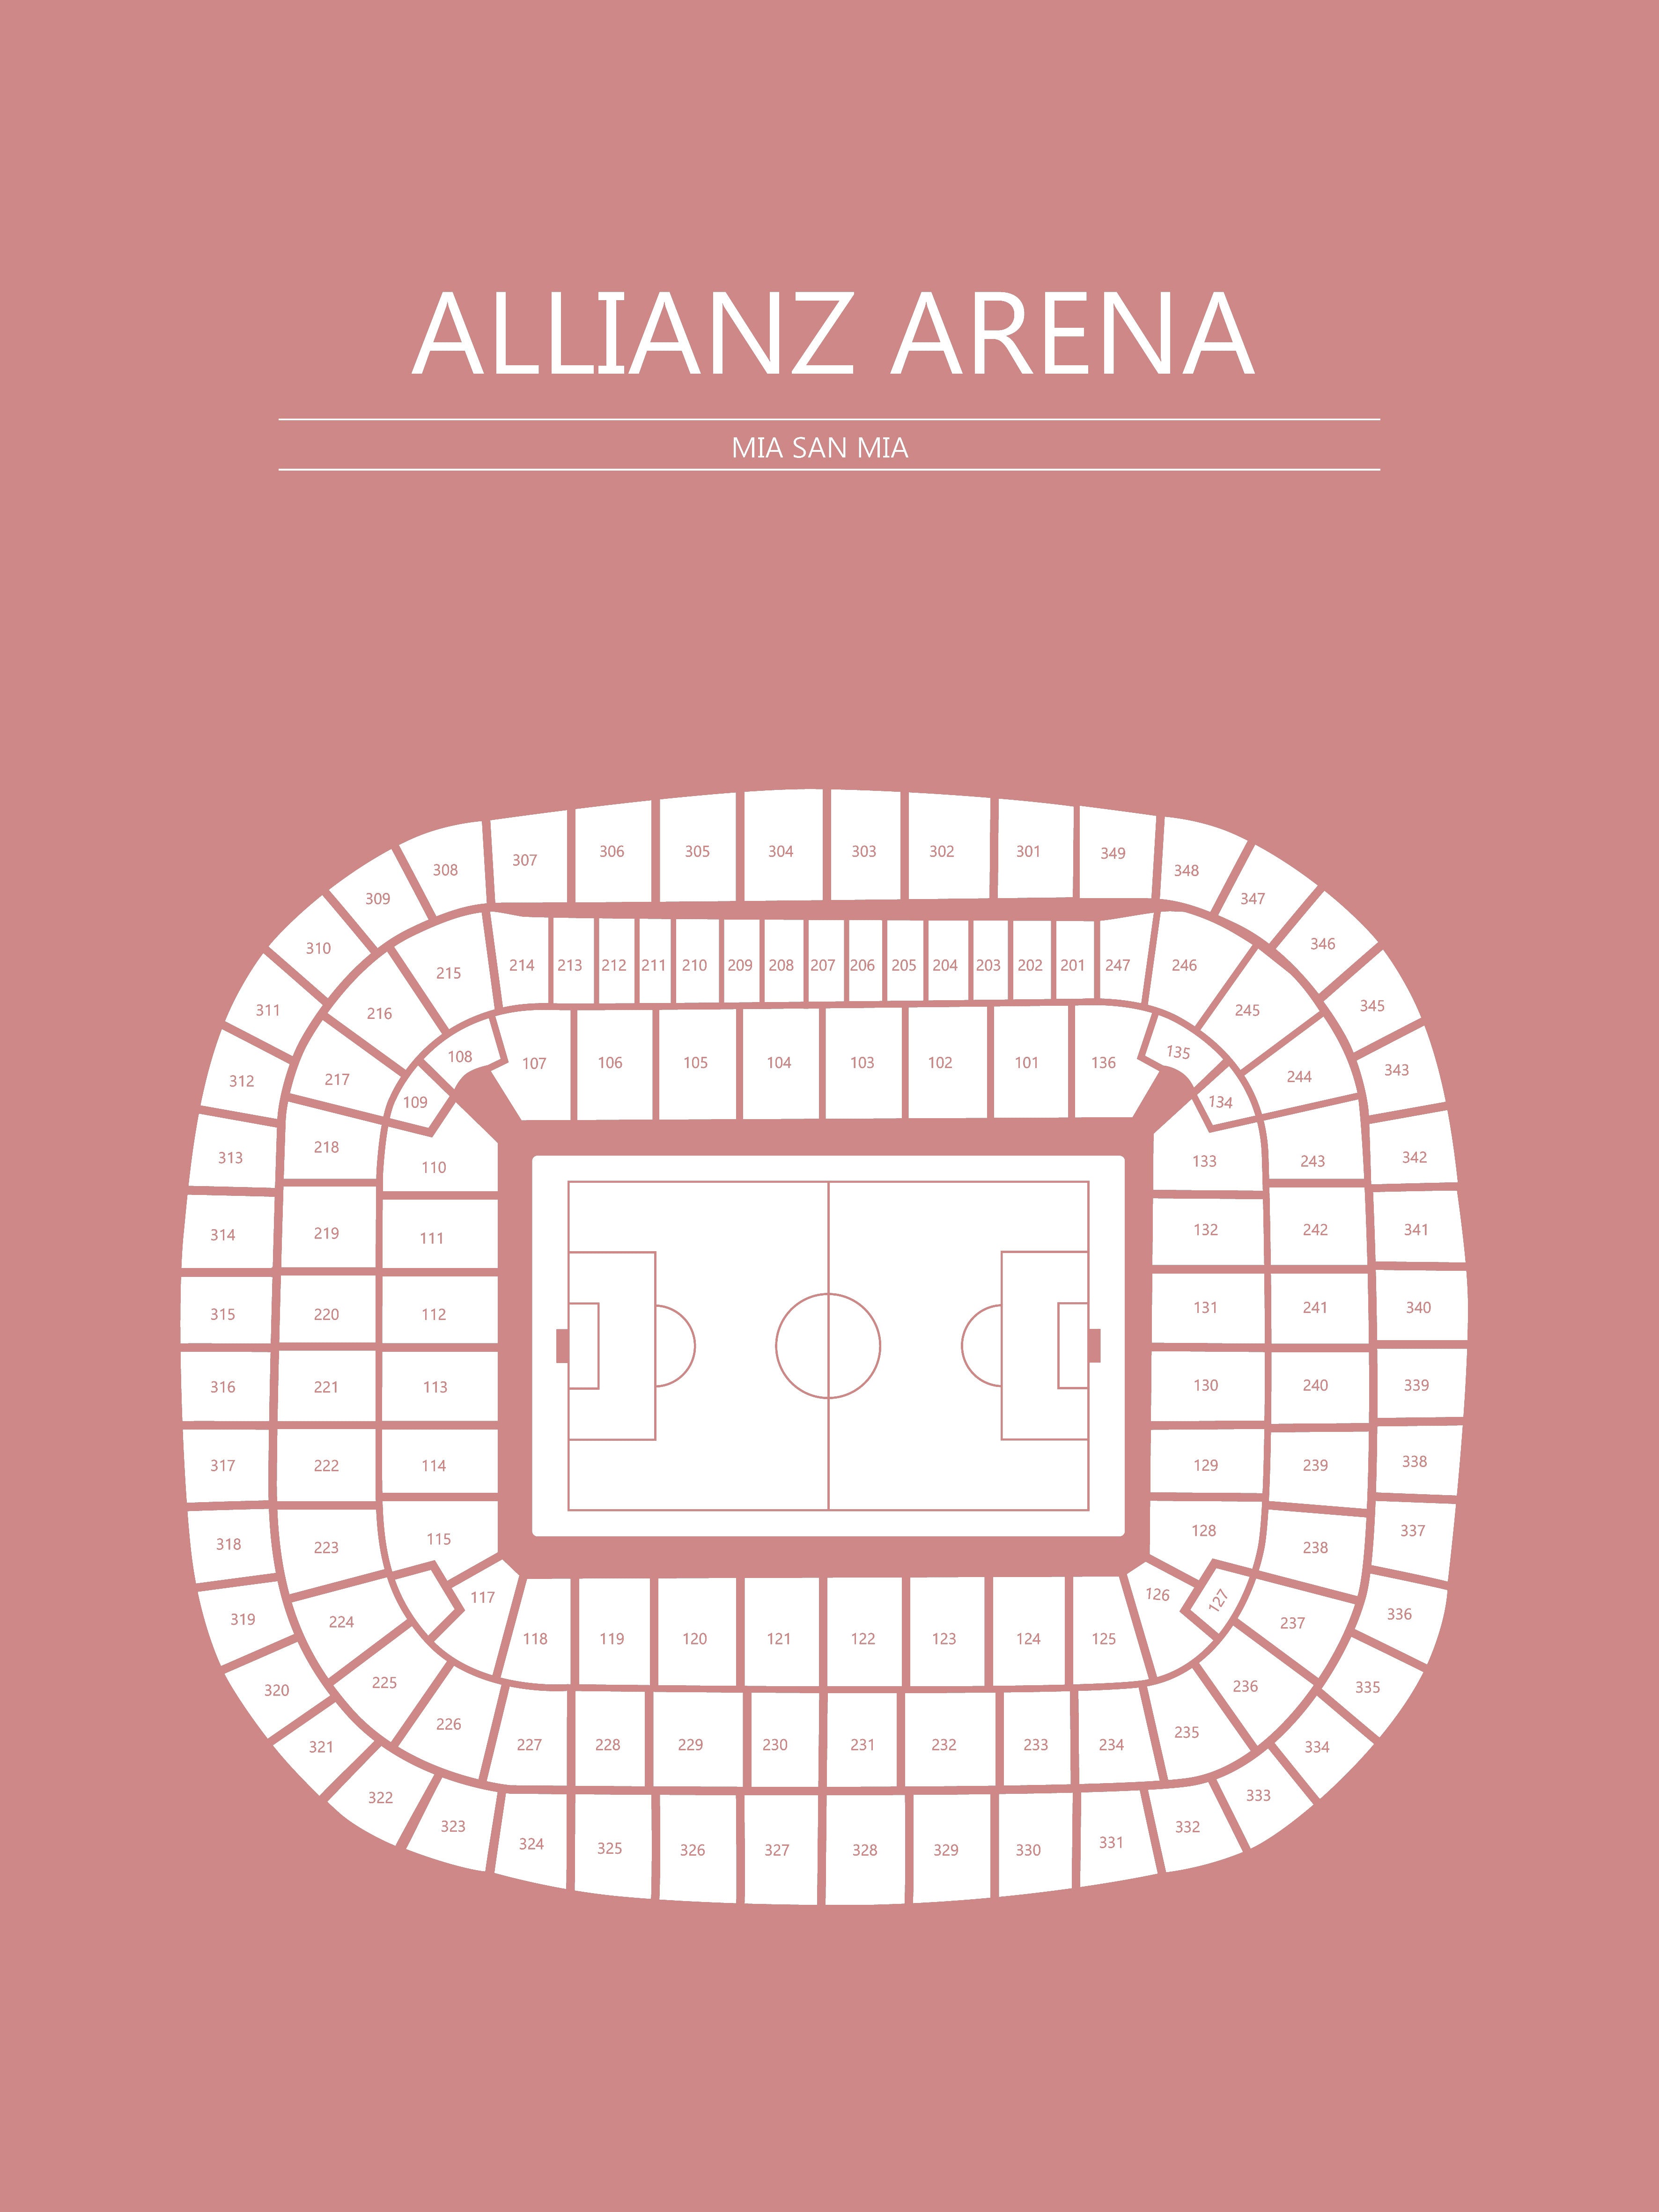 Fodbold plakat Bayern München Allianz Arena  Blush